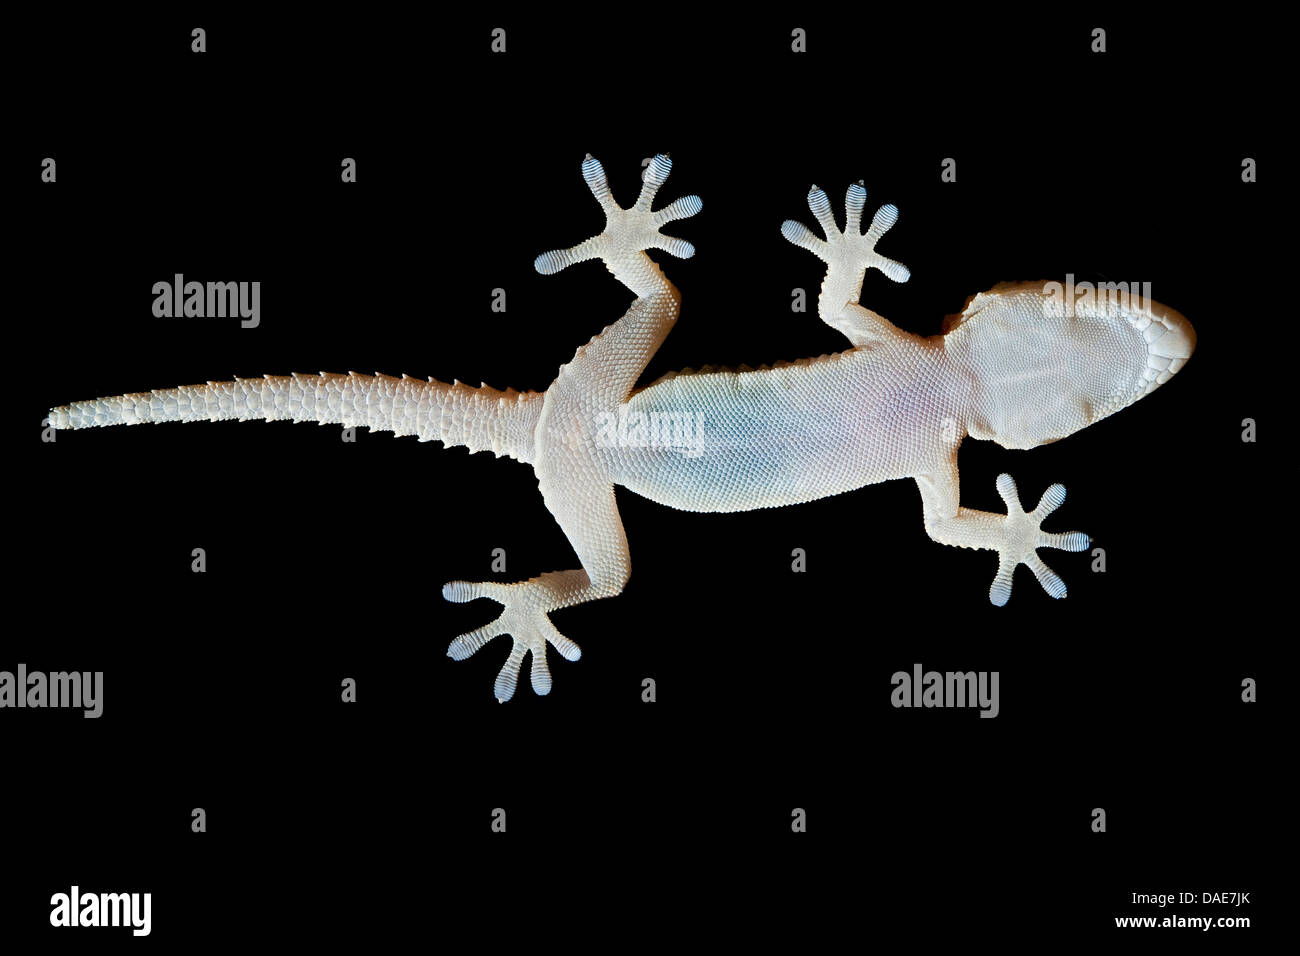 Common wall gecko, Moorish gecko, Moorish Wall Gecko, Salamanquesa, Crocodile gecko, European common gecko, Maurita naca gecko (Tarentola mauritanica), sitting on a glass panel, from below Stock Photo